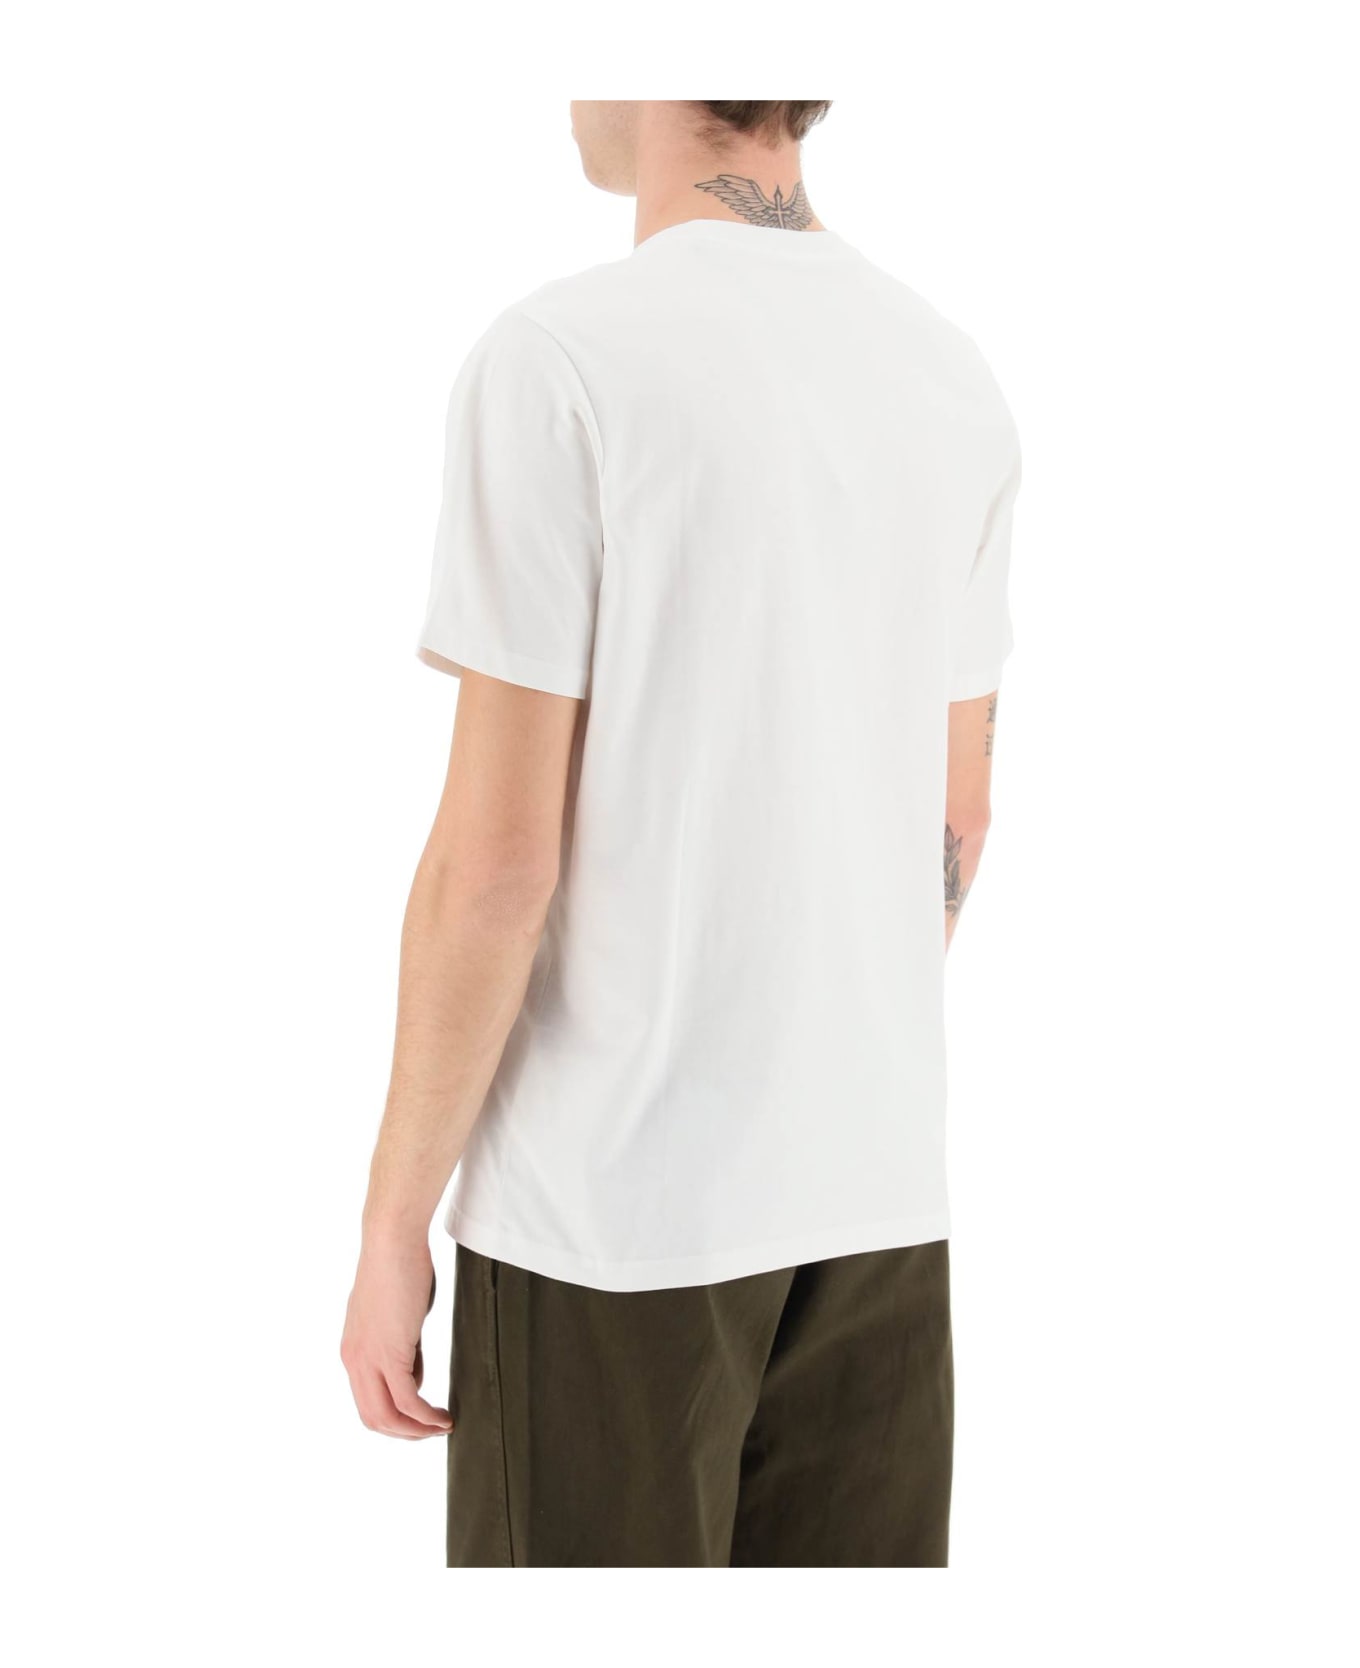 Carhartt 'pocket' T-shirt Featuring Logo Label - Xx White